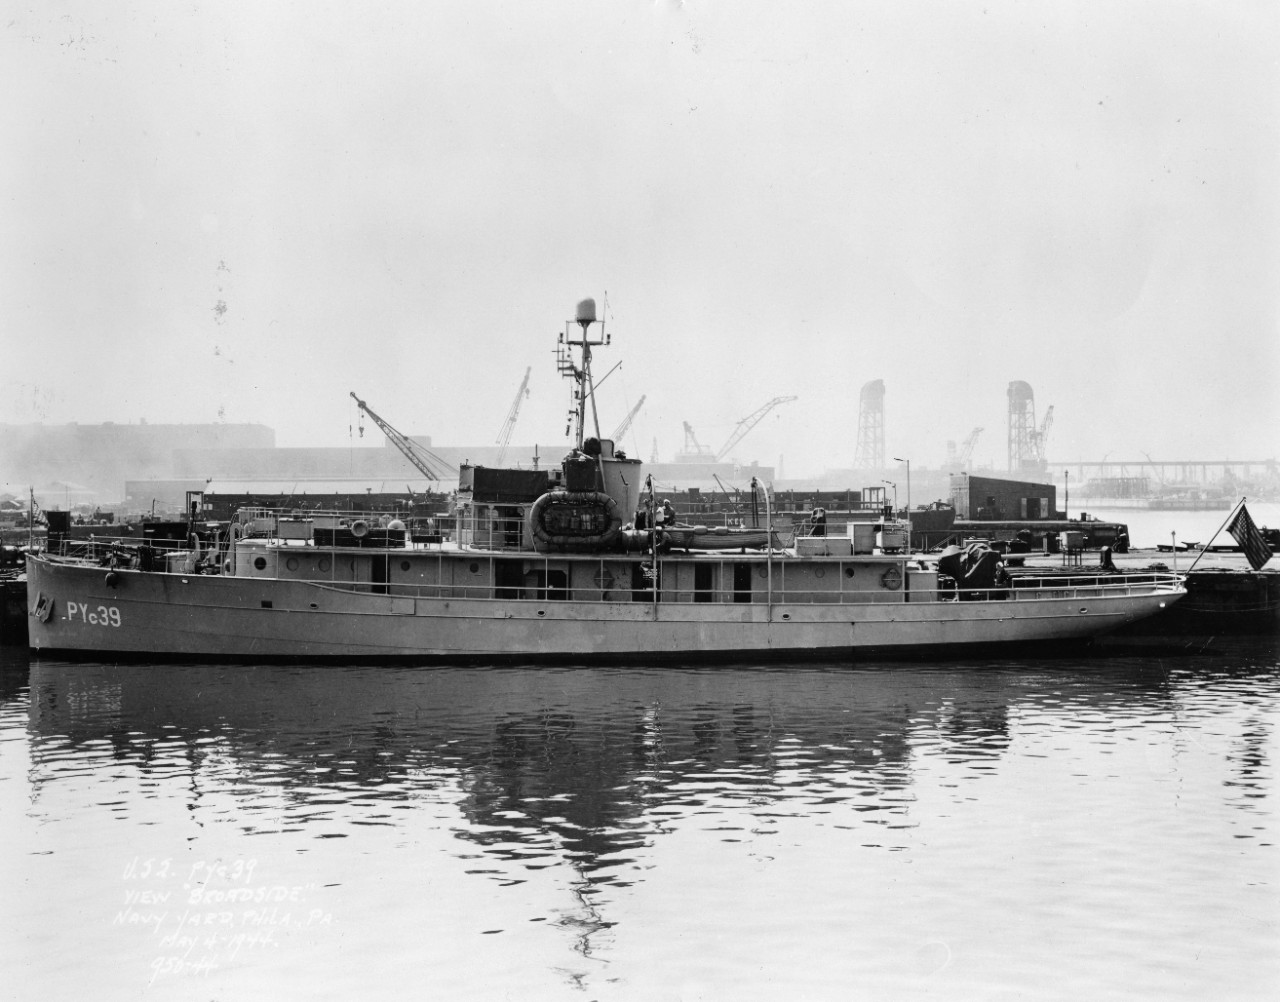 USS Marnell (PYc-39) at the Philadelphia Navy Yard